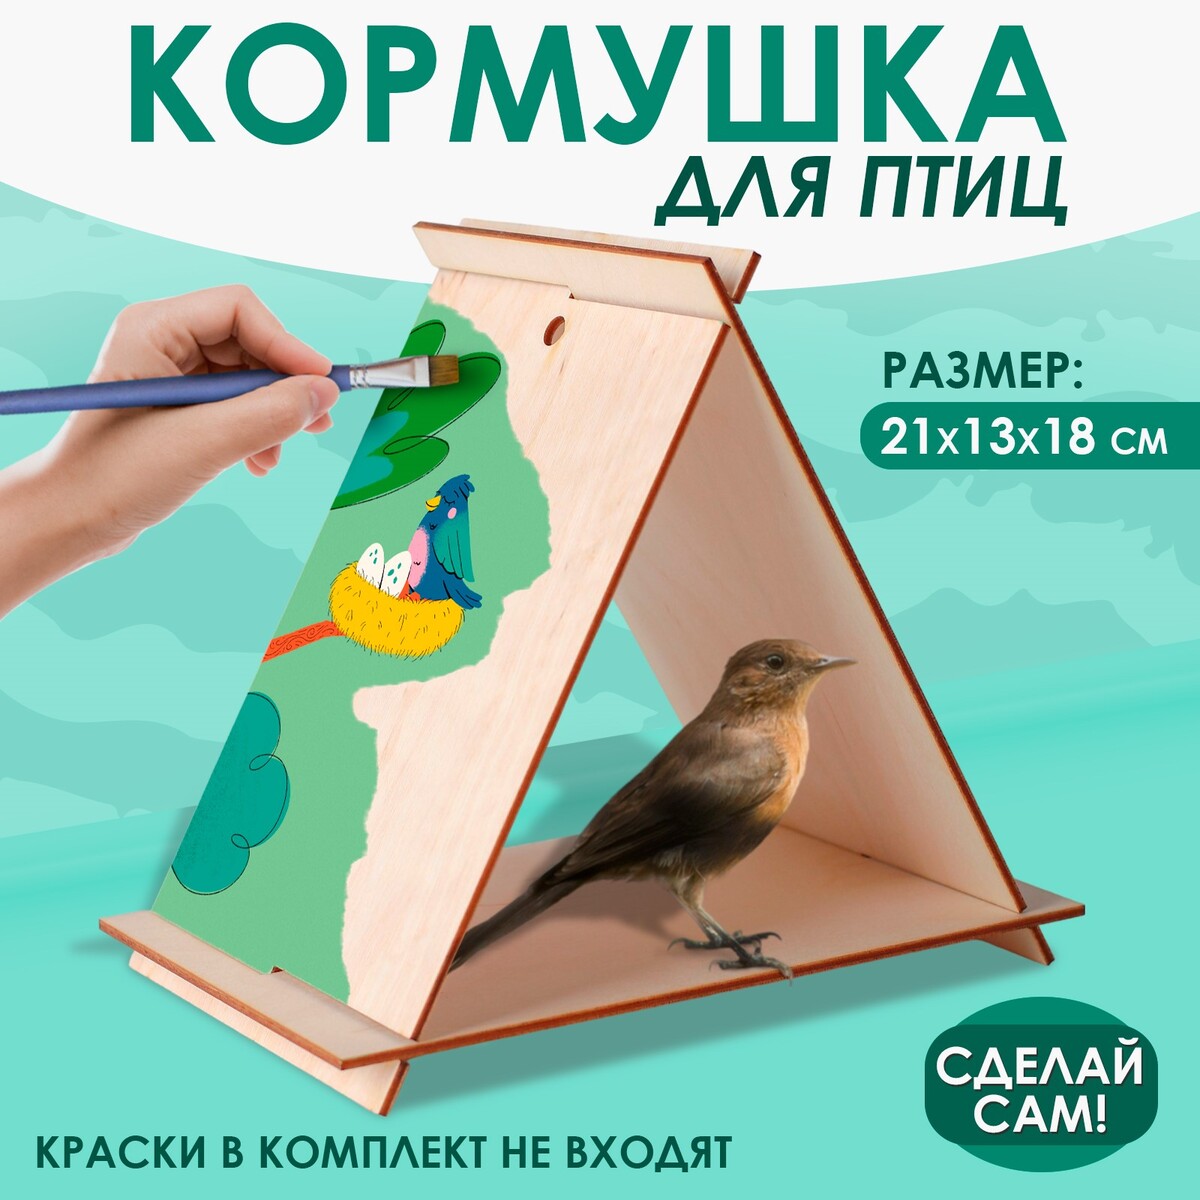 Деревянный скворечник - кормушка для птиц